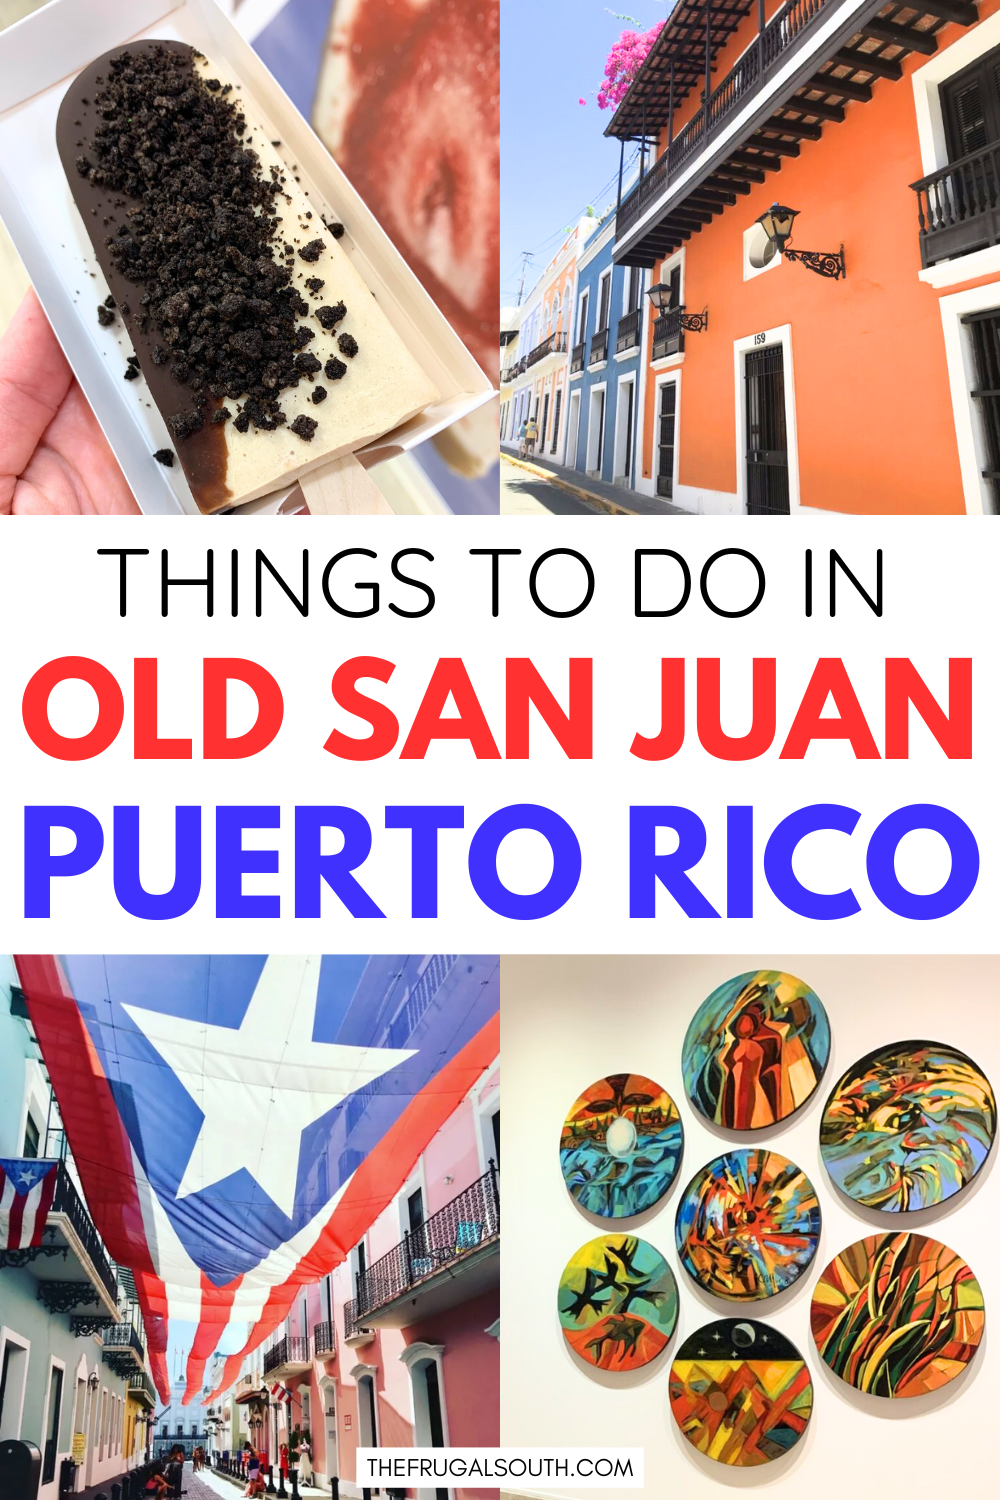 THINGS TO DO IN OLD SAN JUAN PUERTO RICO PIN